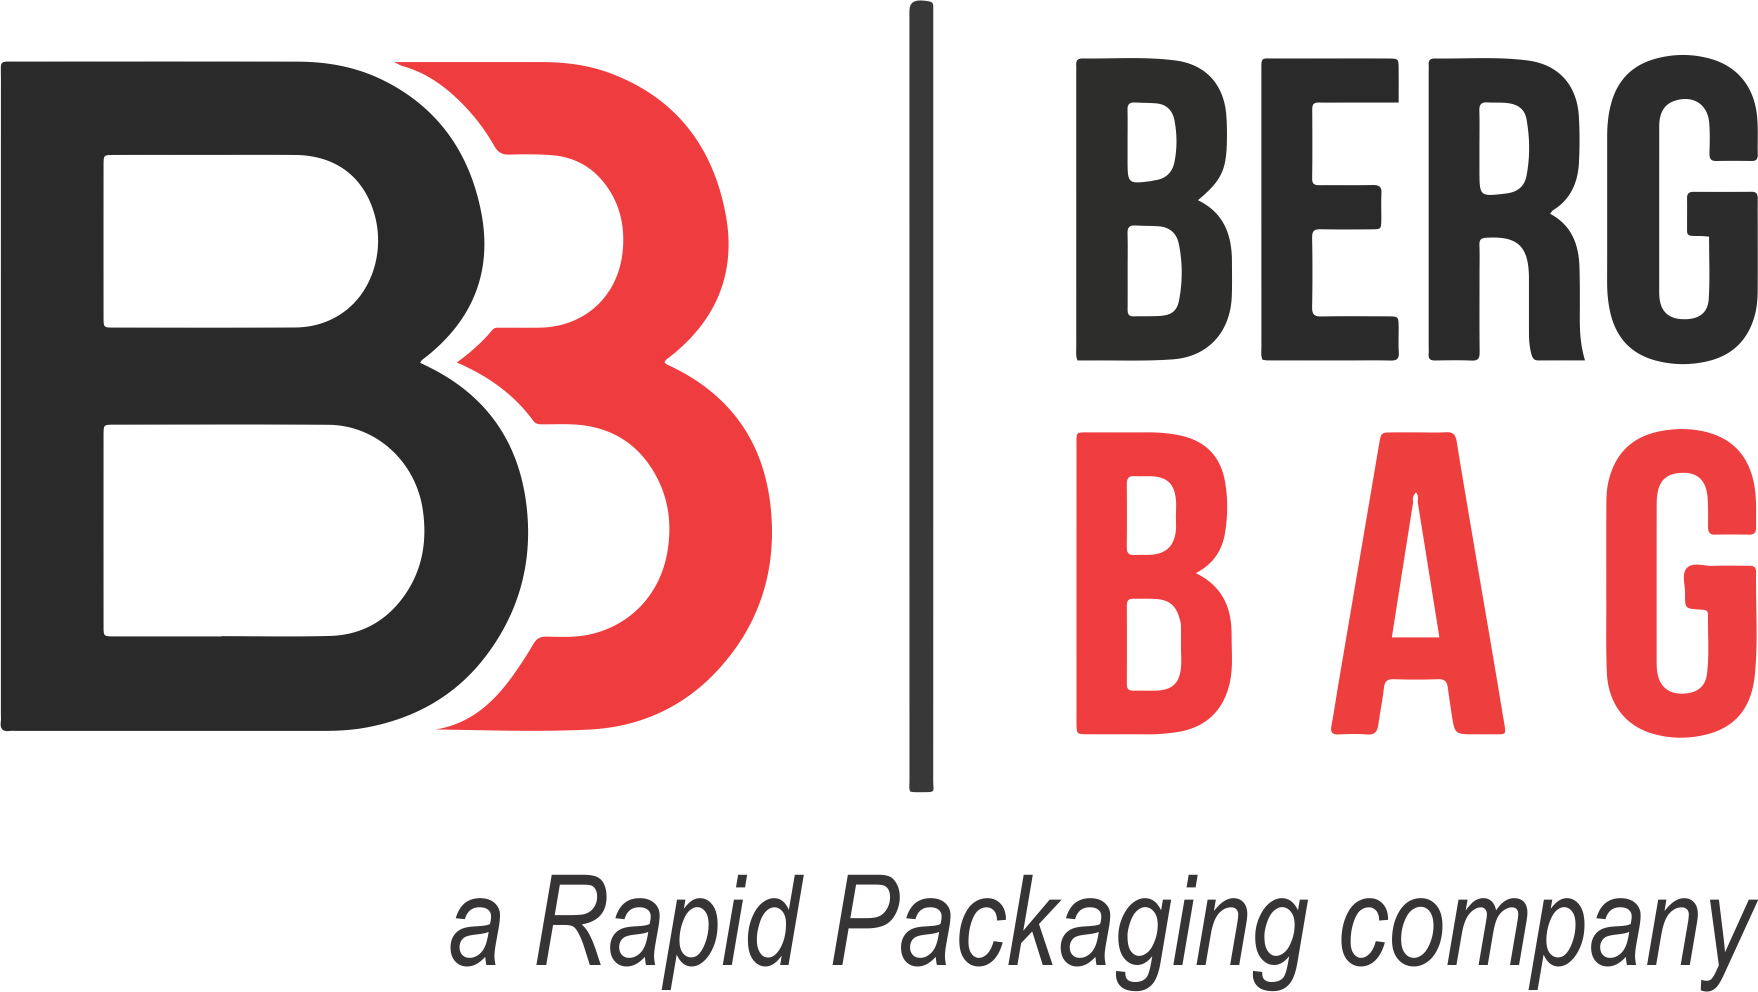 RPI Logo - Berg Bag RPI logo - Rapid Packaging